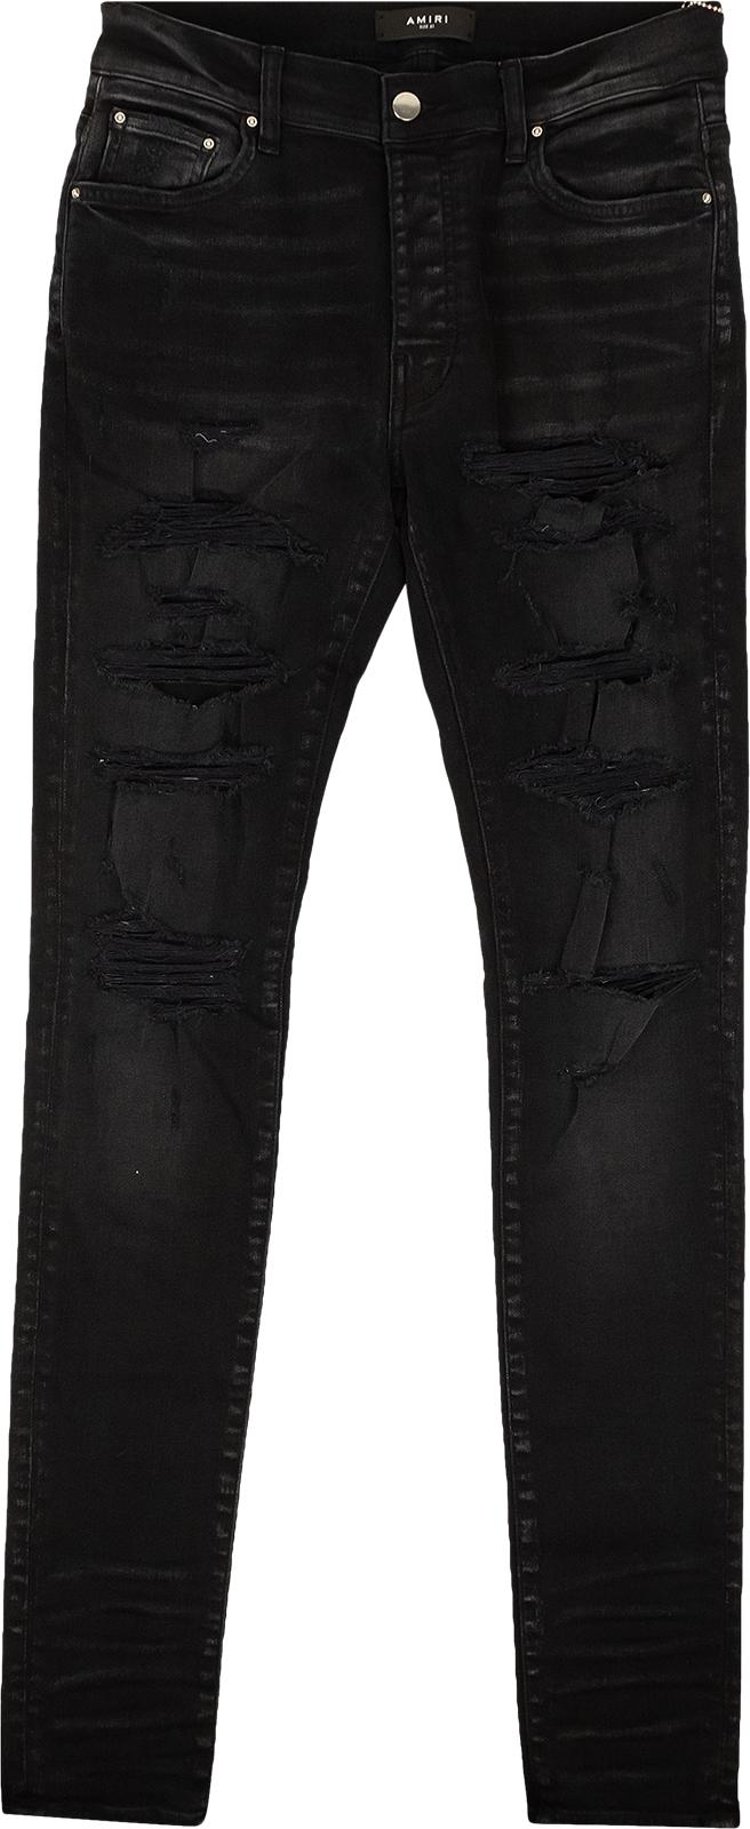 Buy Amiri Thrasher Plus Distressed Jeans 'Black' - PXMD005 023 BLAC | GOAT